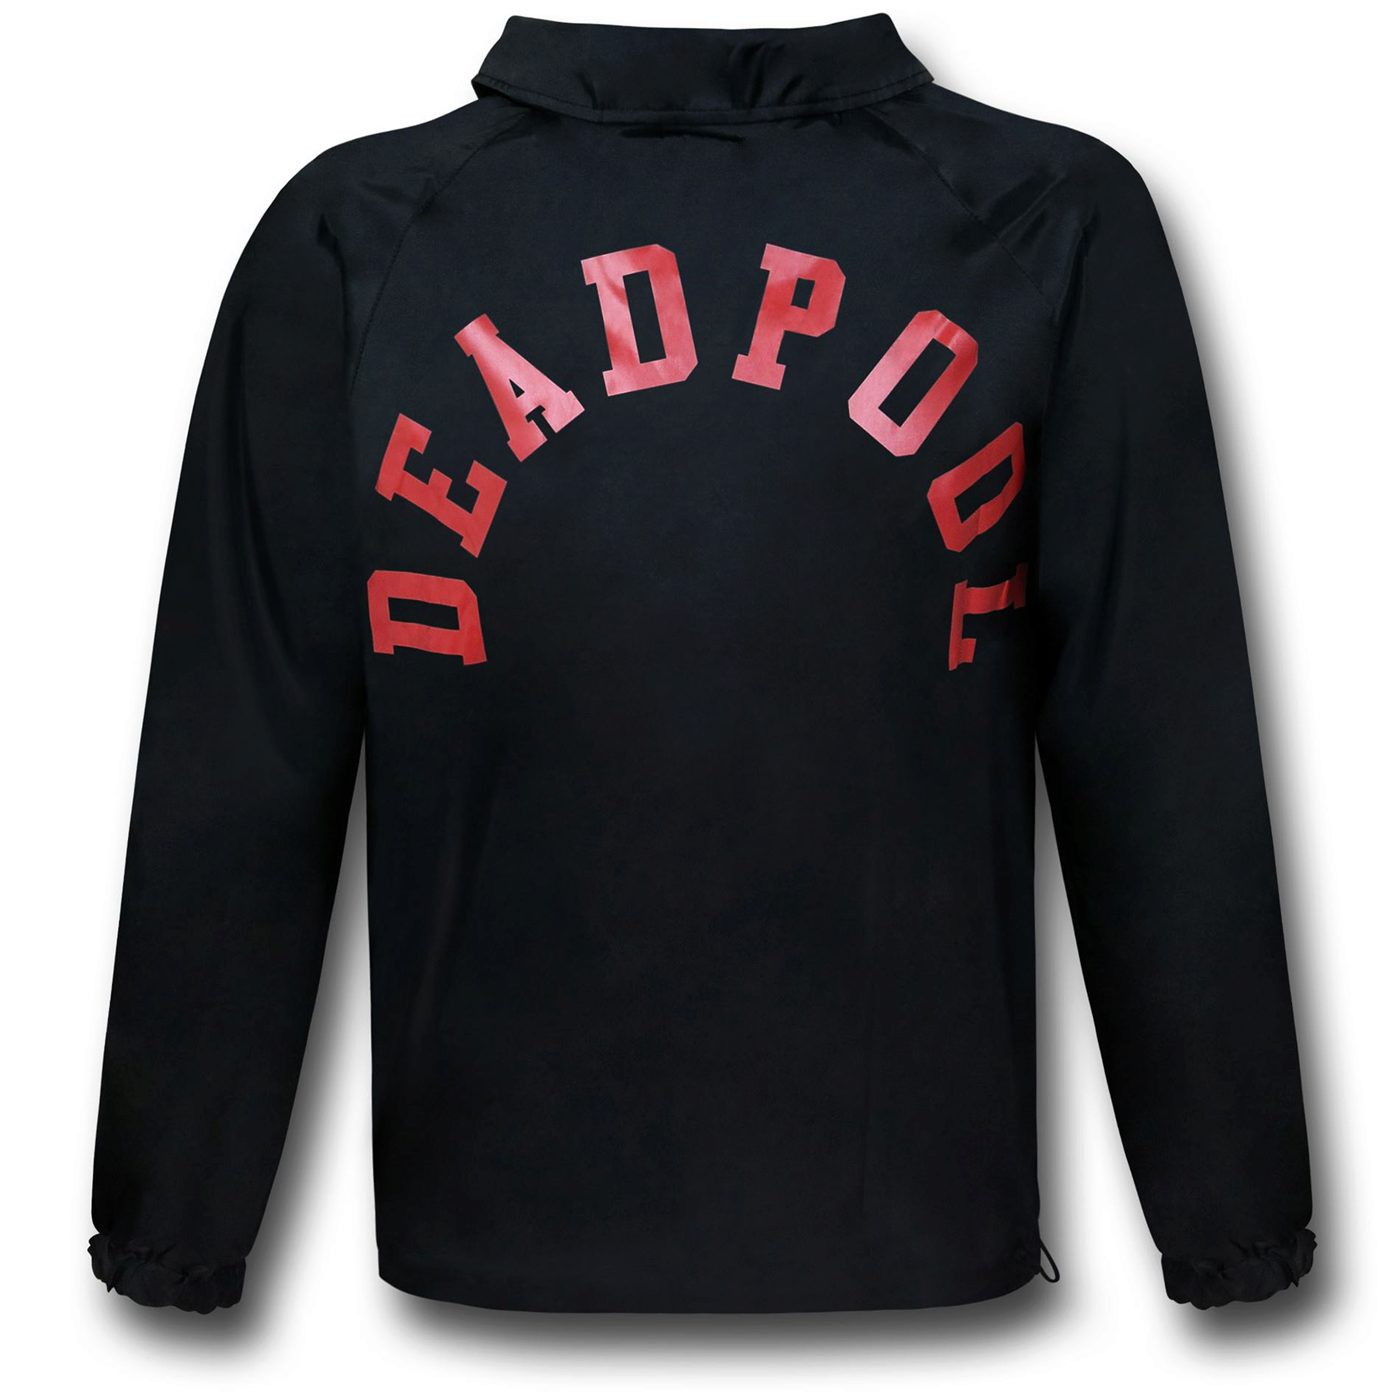 Deadpool Symbol Black Windbreaker